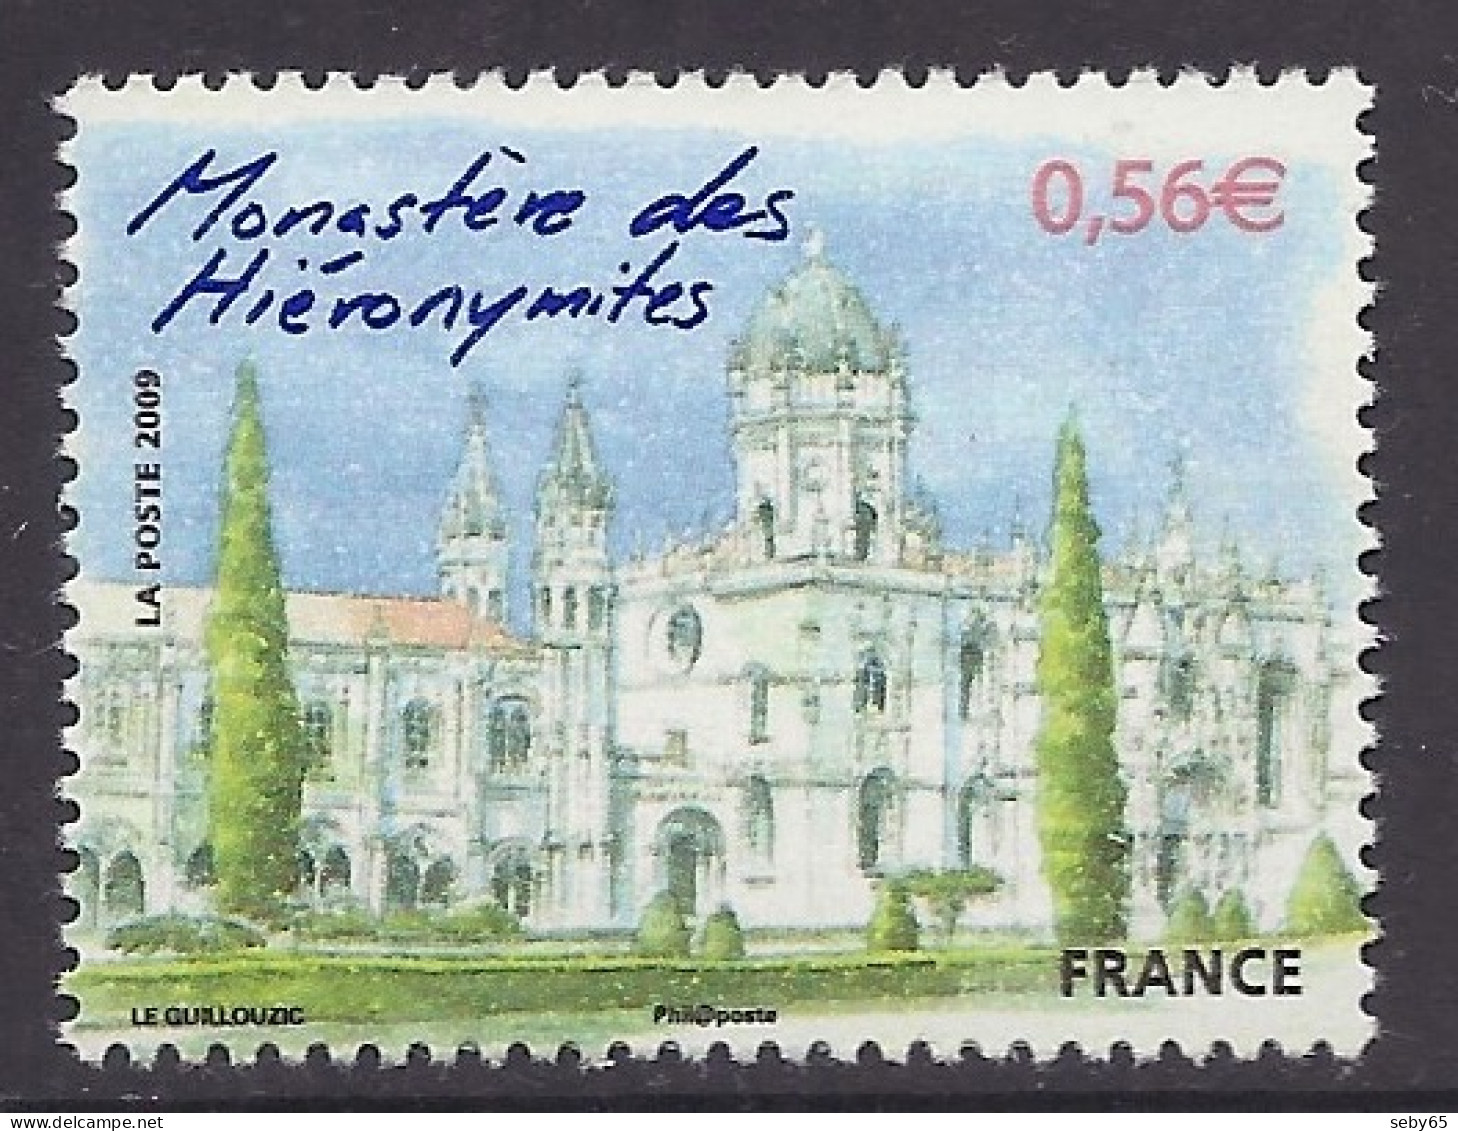 France 2009 - Capitales Européennes, Lisbonne, Lisboa, Lisbona, European Capitals, Monastery Of Hieronymites - MNH - Neufs